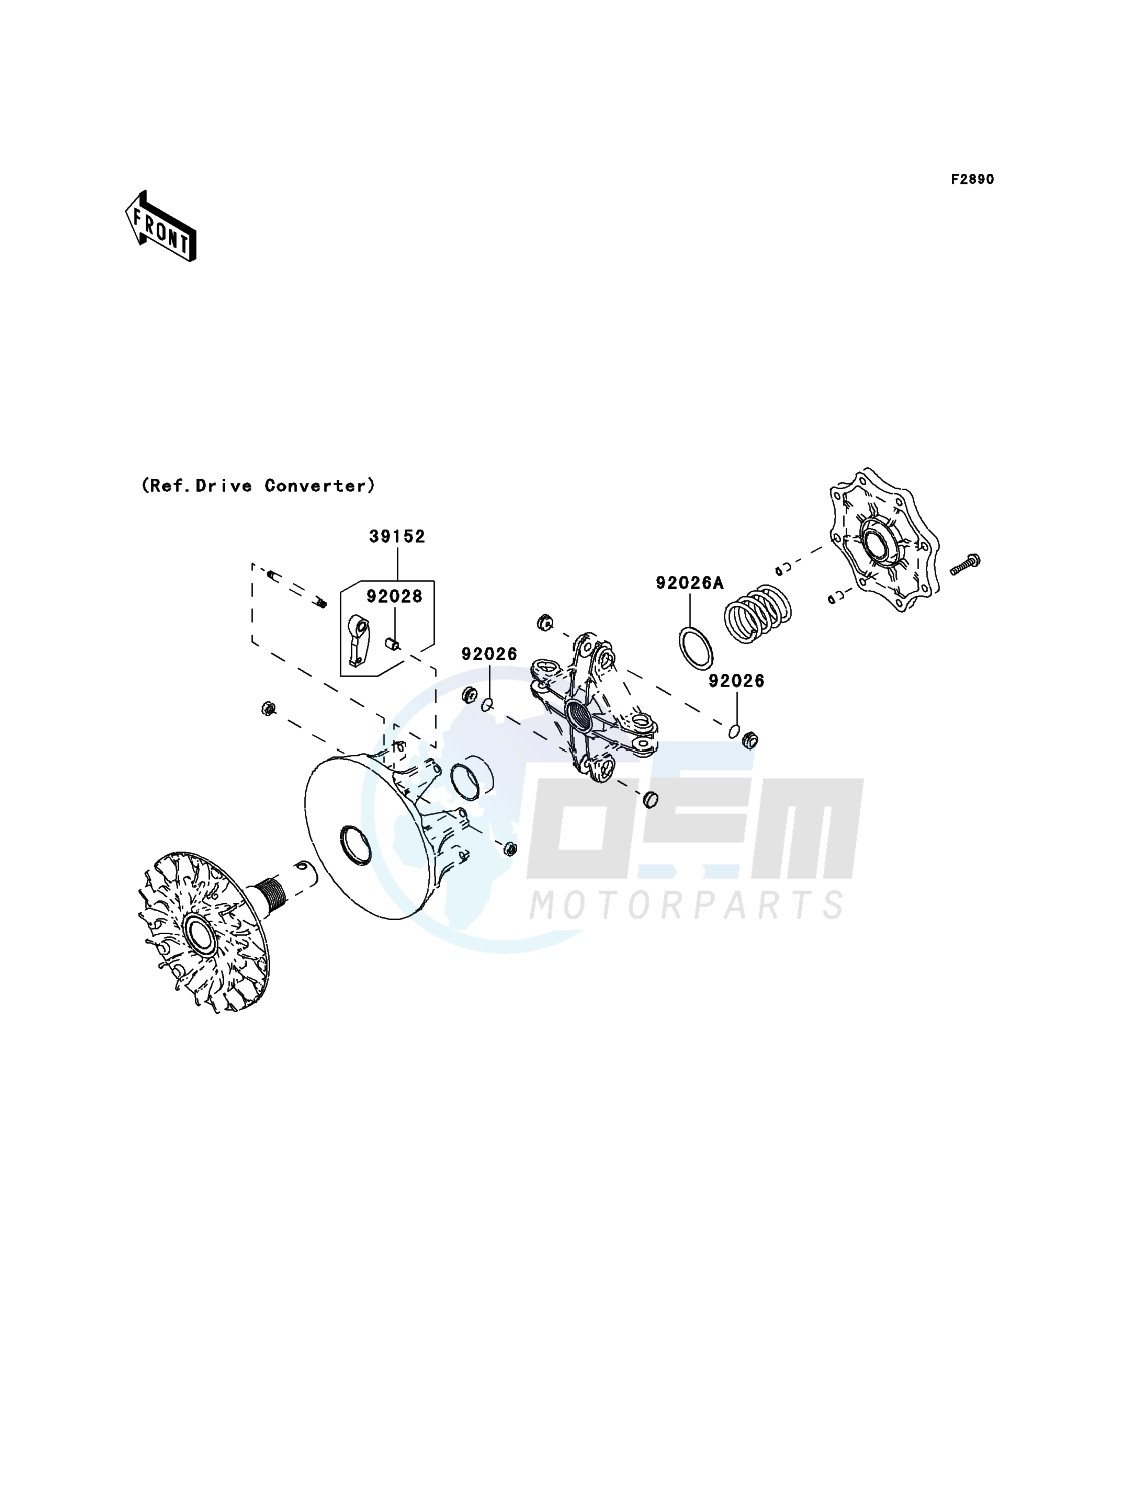 Optional Parts(Drive Converter) image